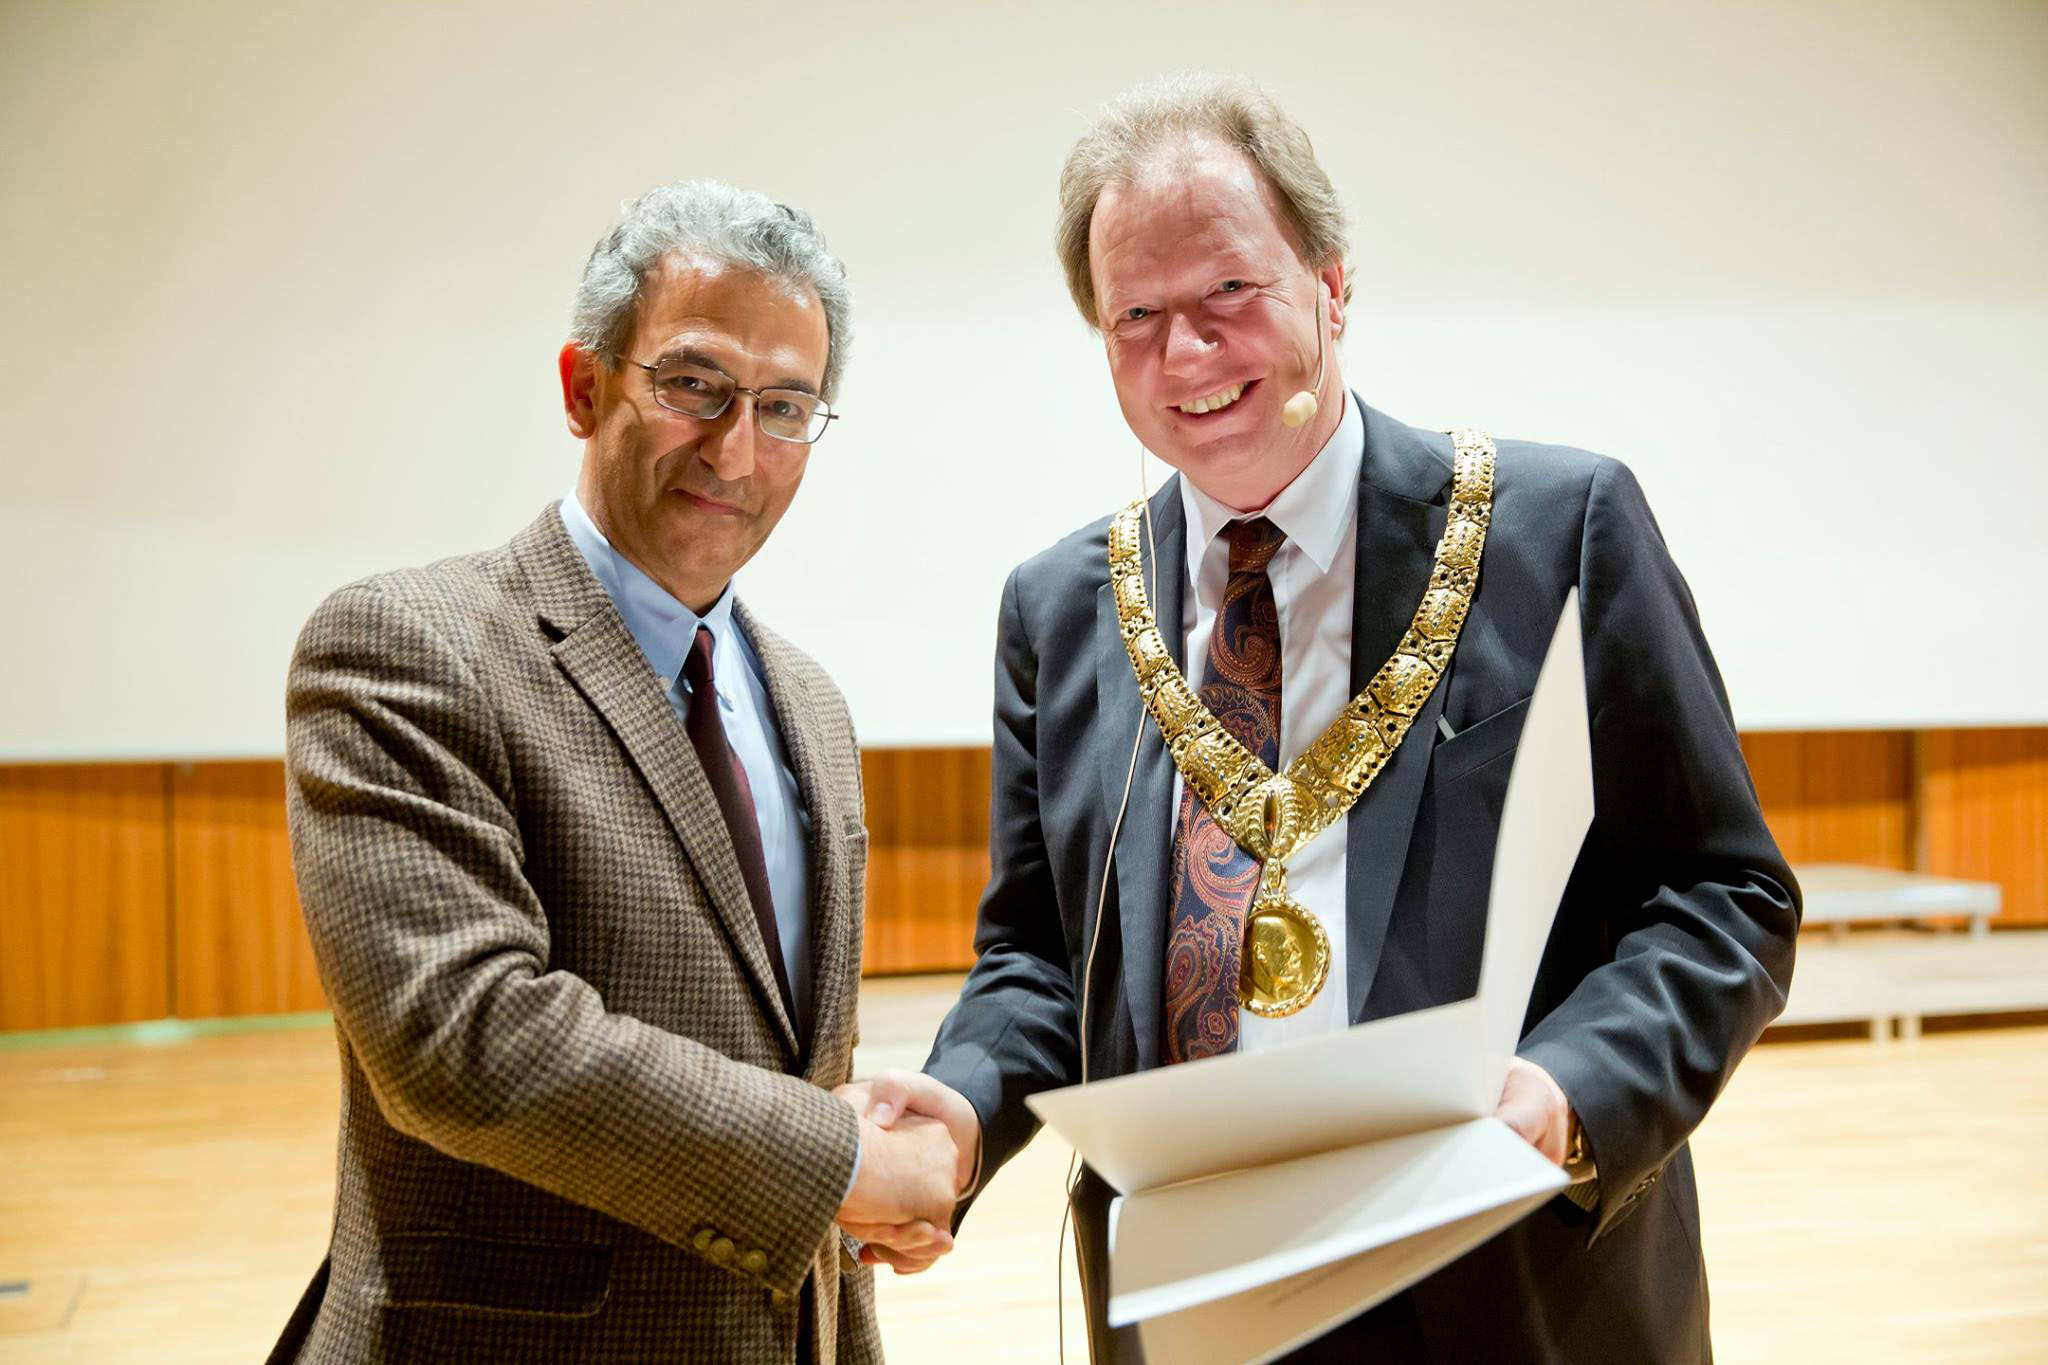 Nader Engheta receiving the honorary doctoral degree (Dr. rer. nat. h.c.) from the University of Stuttgart